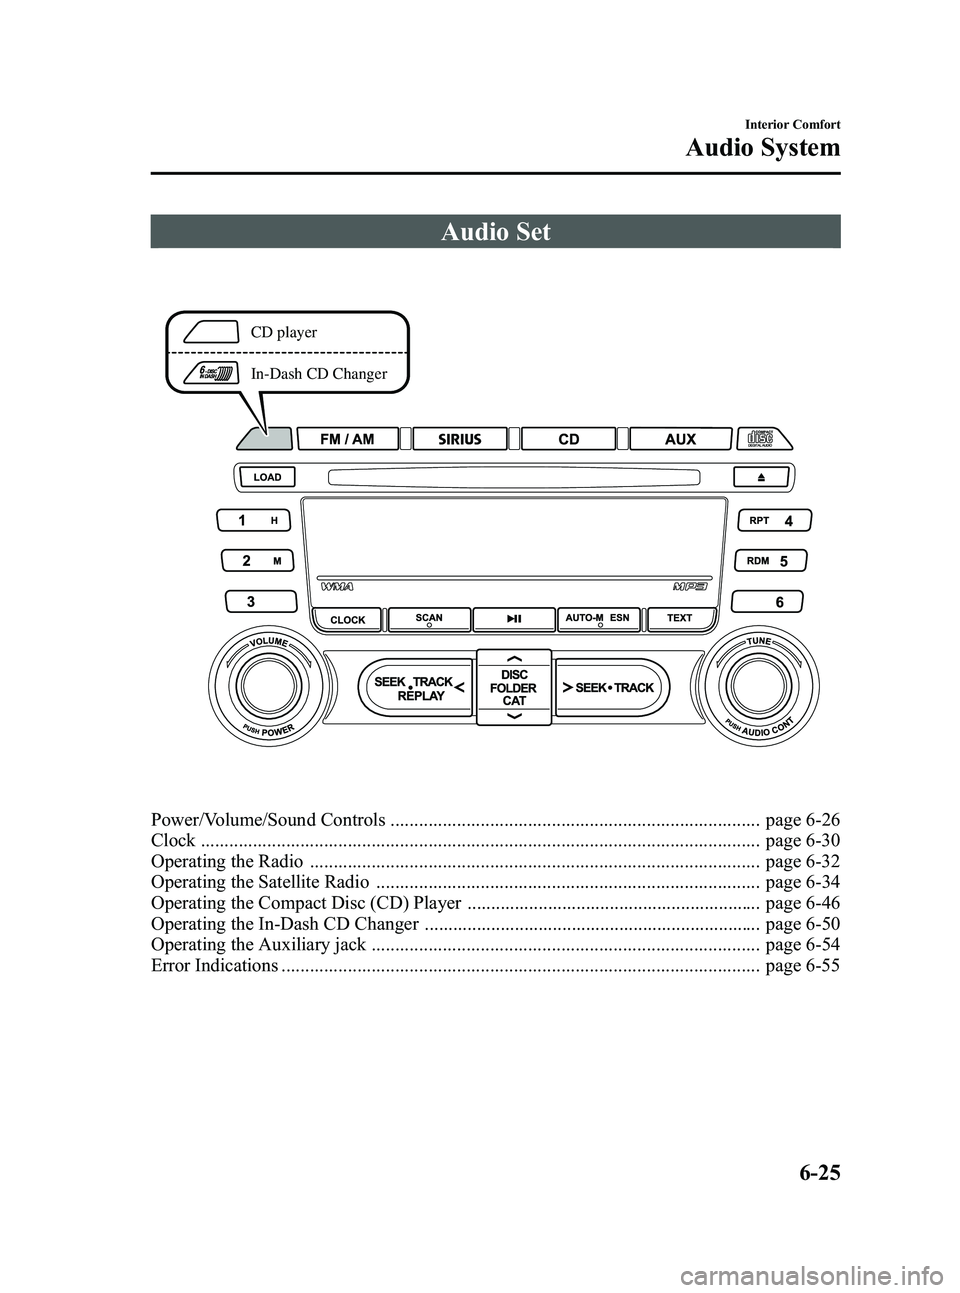 MAZDA MODEL MX-5 MIATA PRHT 2013  Owners Manual Black plate (237,1)
Audio Set
CD player
In-Dash CD Changer
Power/Volume/Sound Controls .............................................................................. page 6-26
Clock ..................